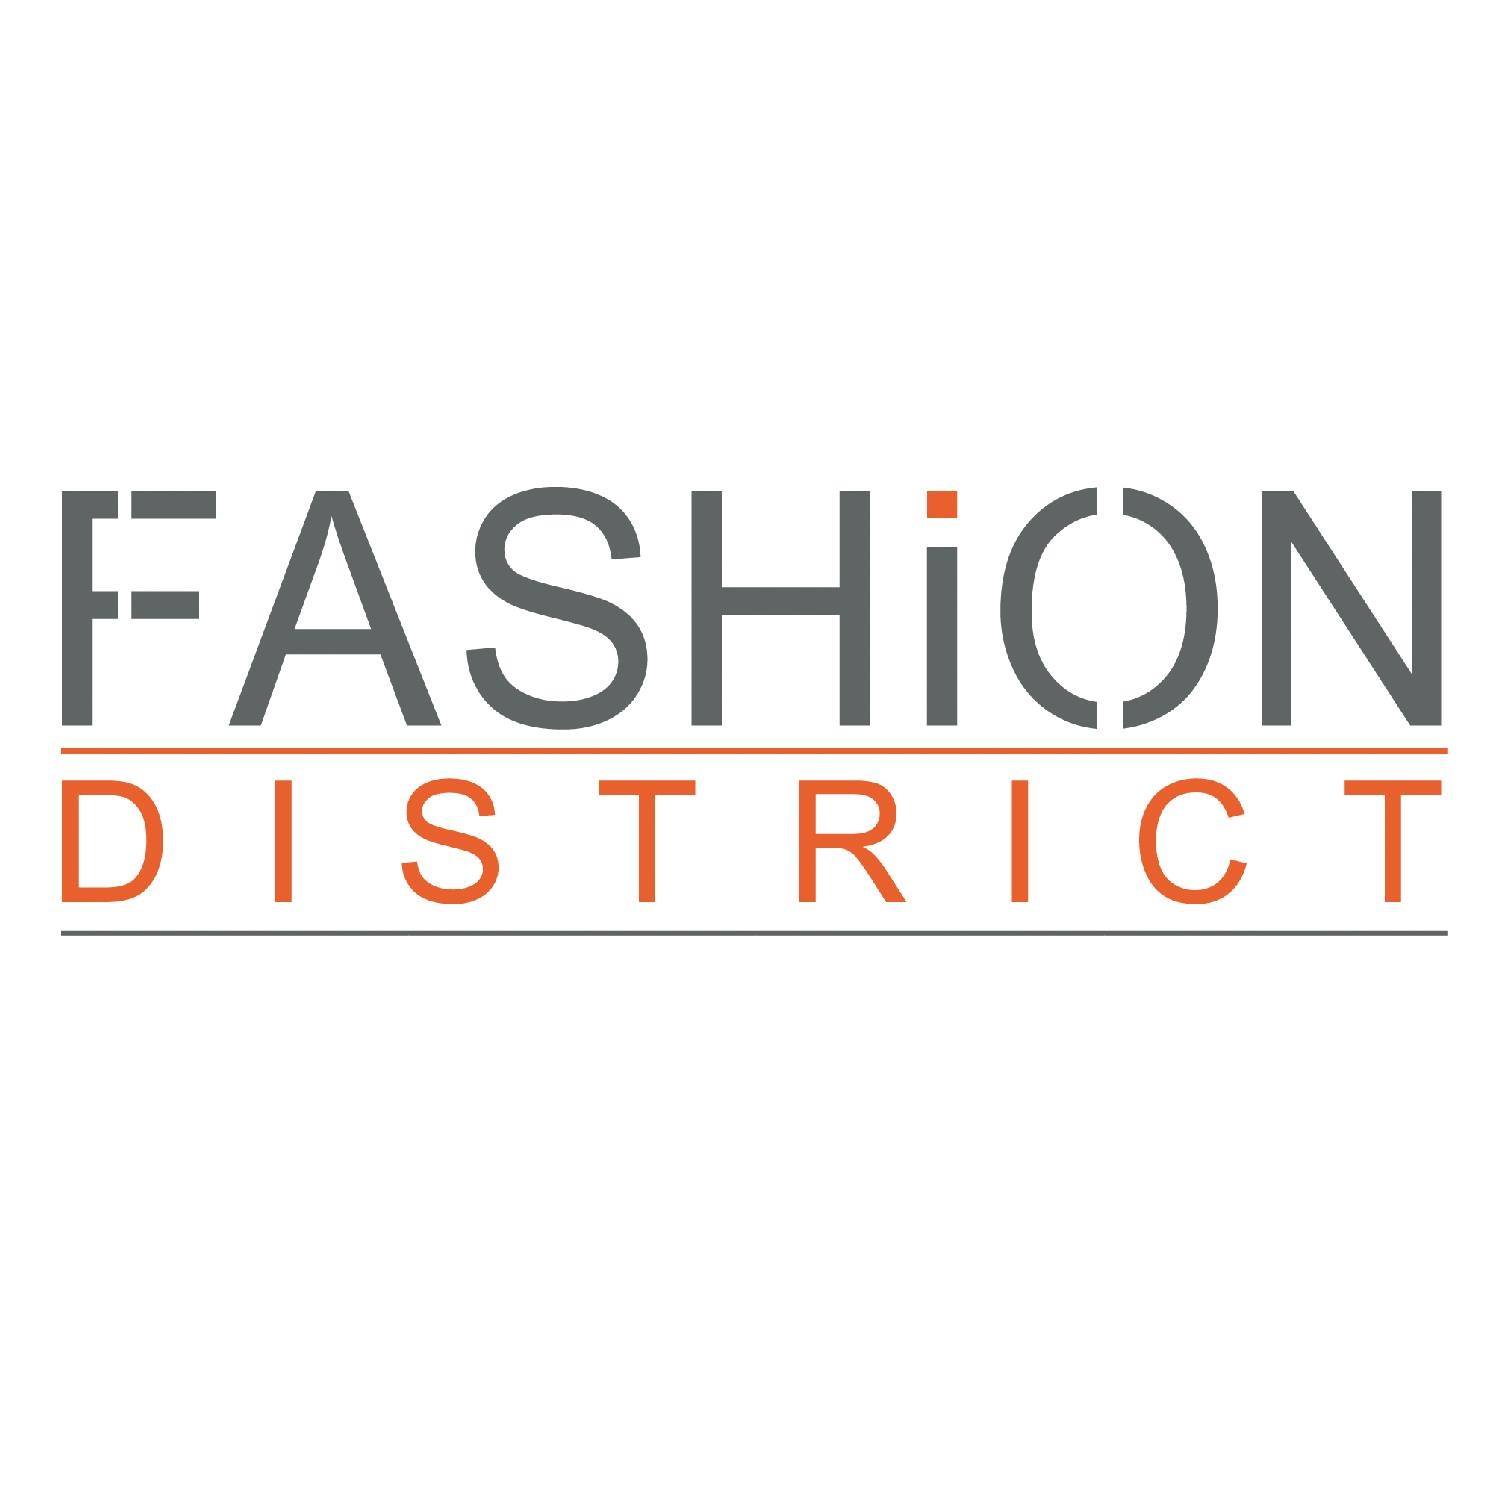 فاشون ديستريكت Fashion District